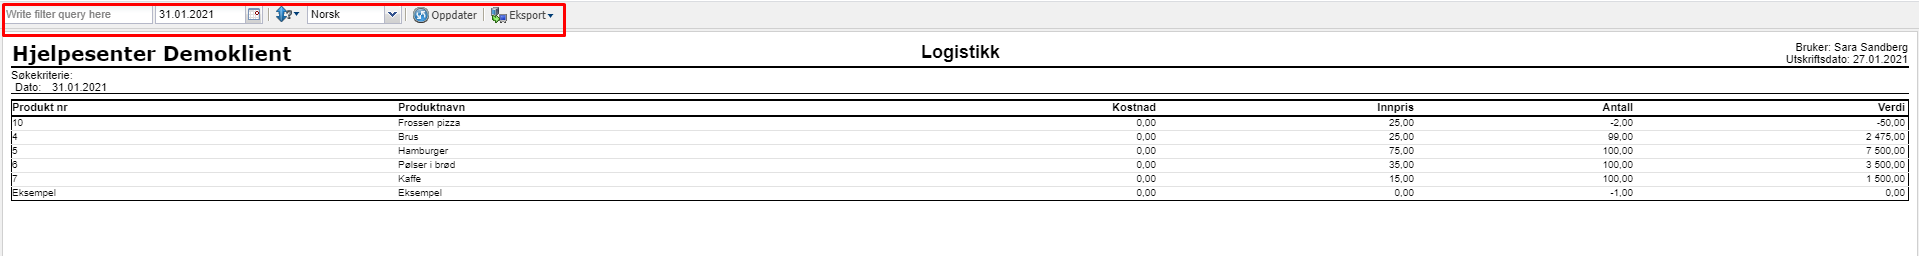 logistikk_2.png